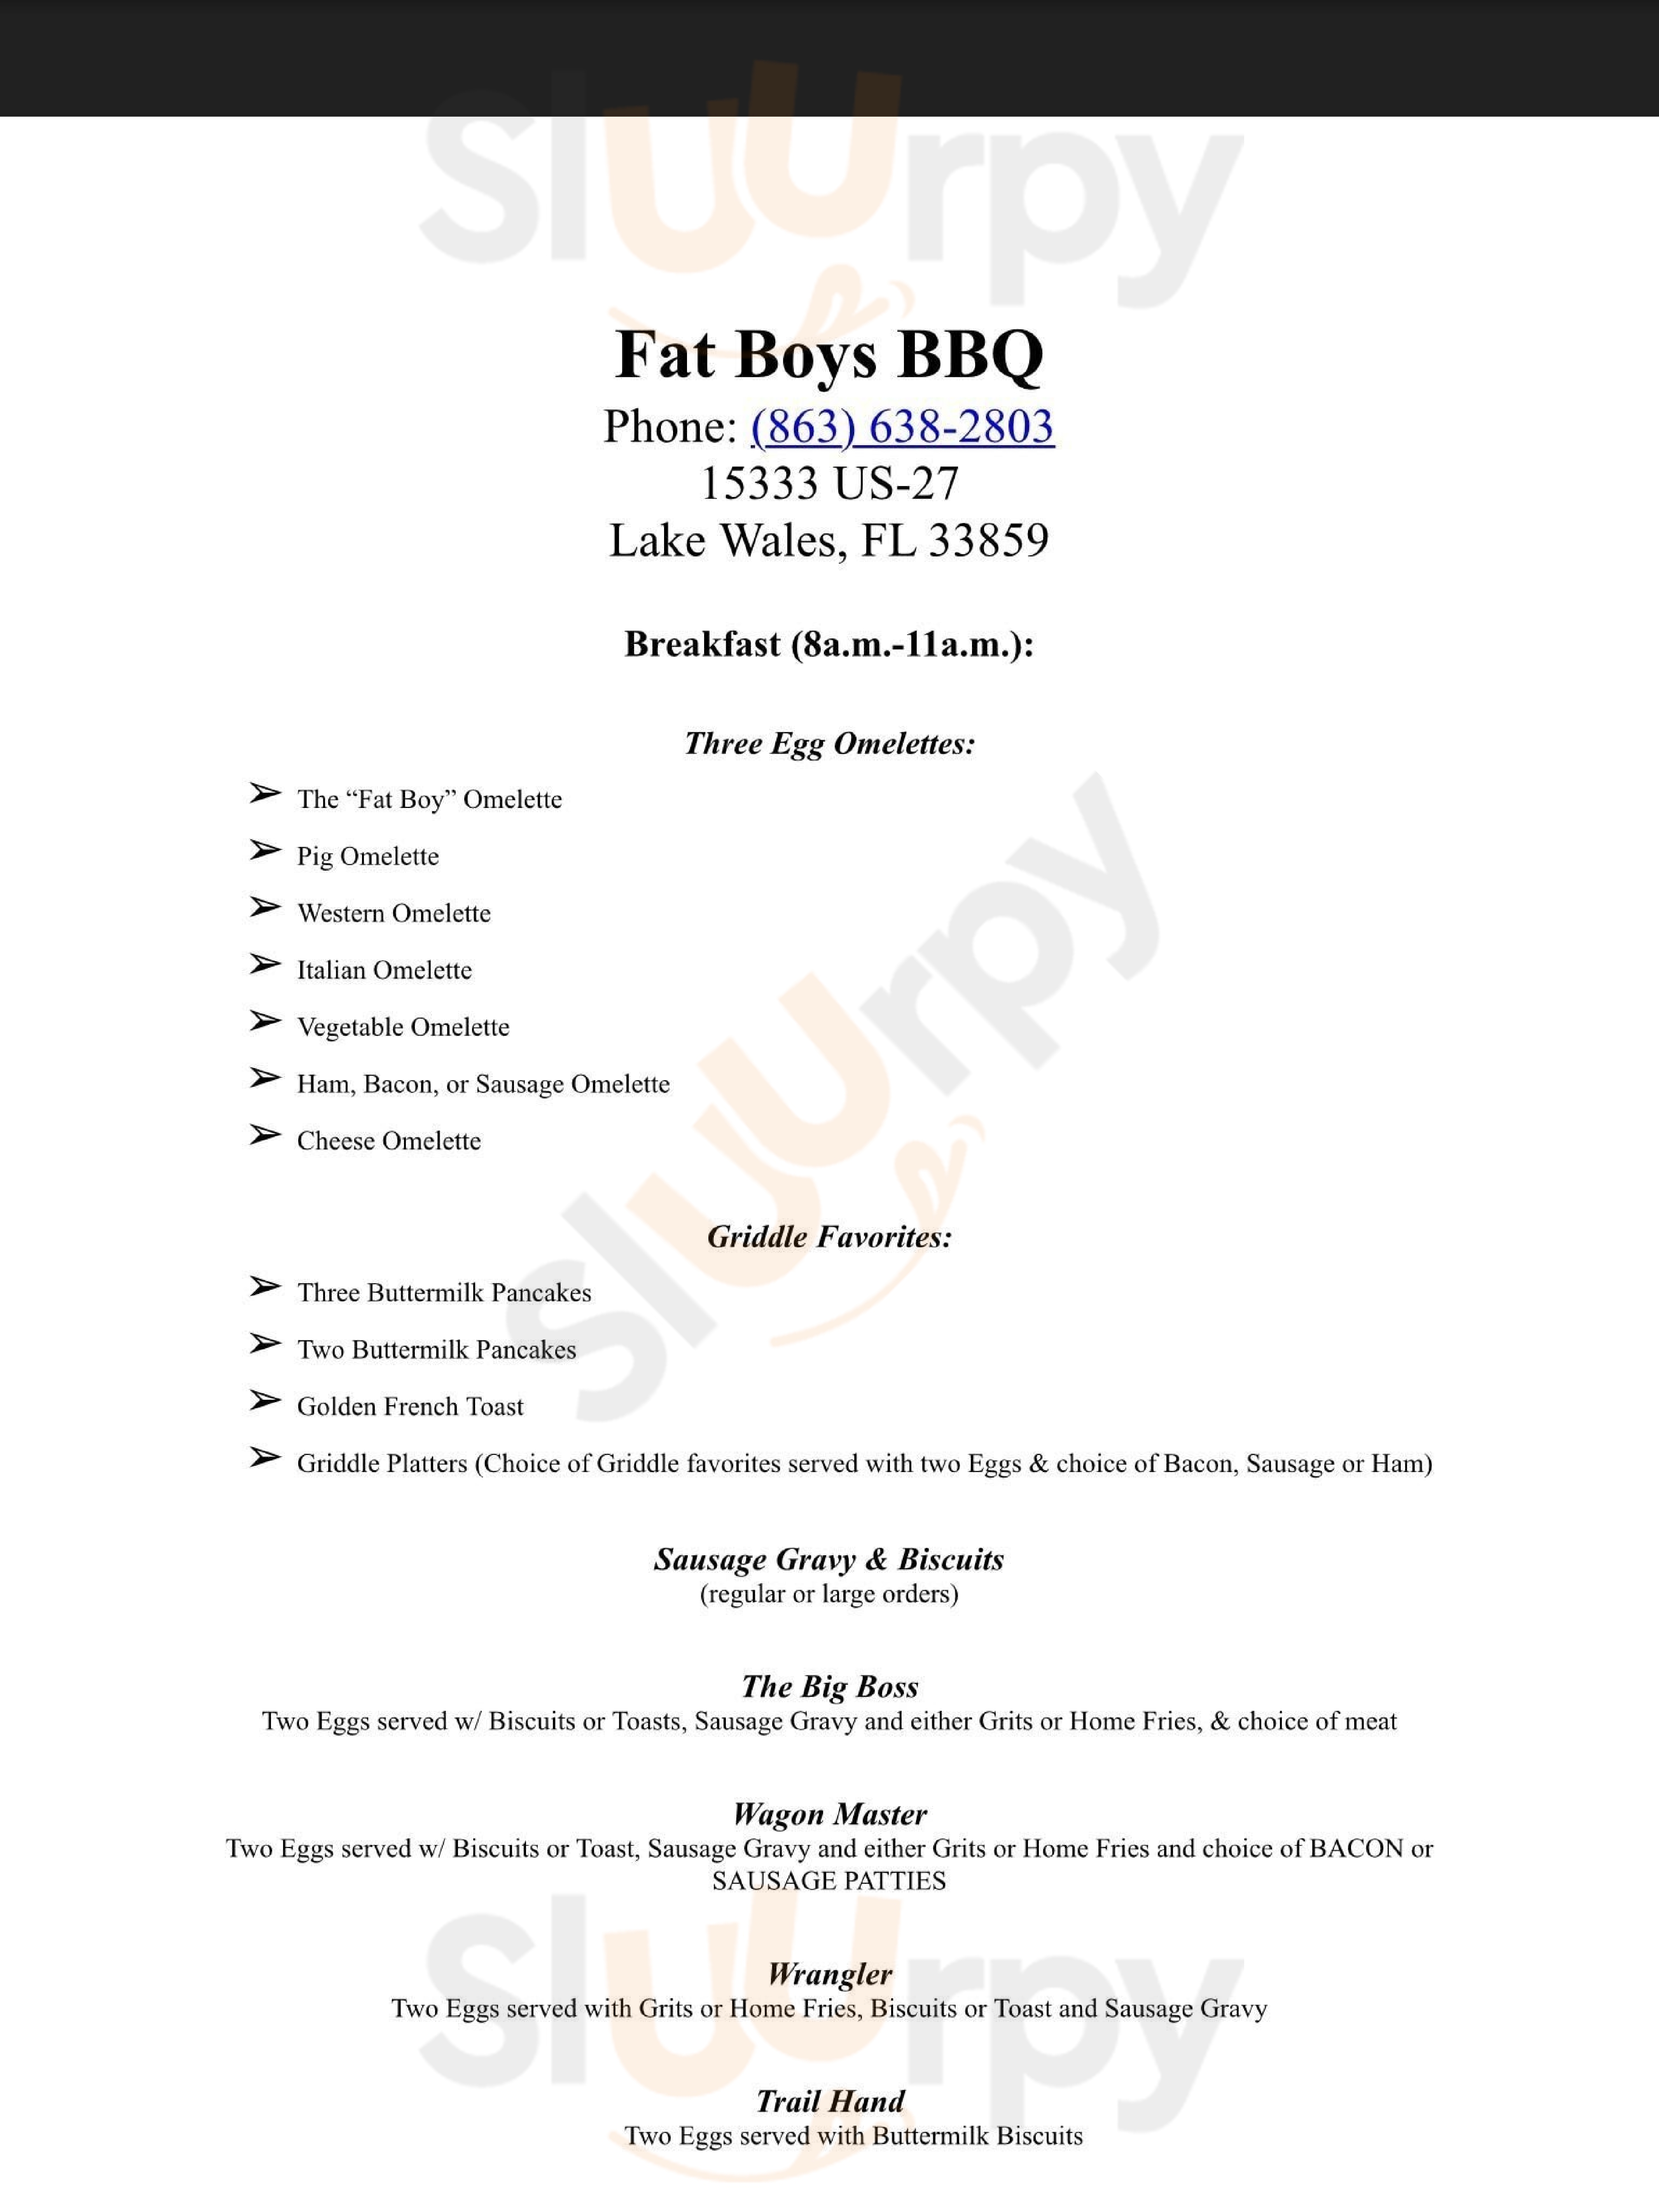 Fat Boys' Bar-b-q Lake Wales Menu - 1